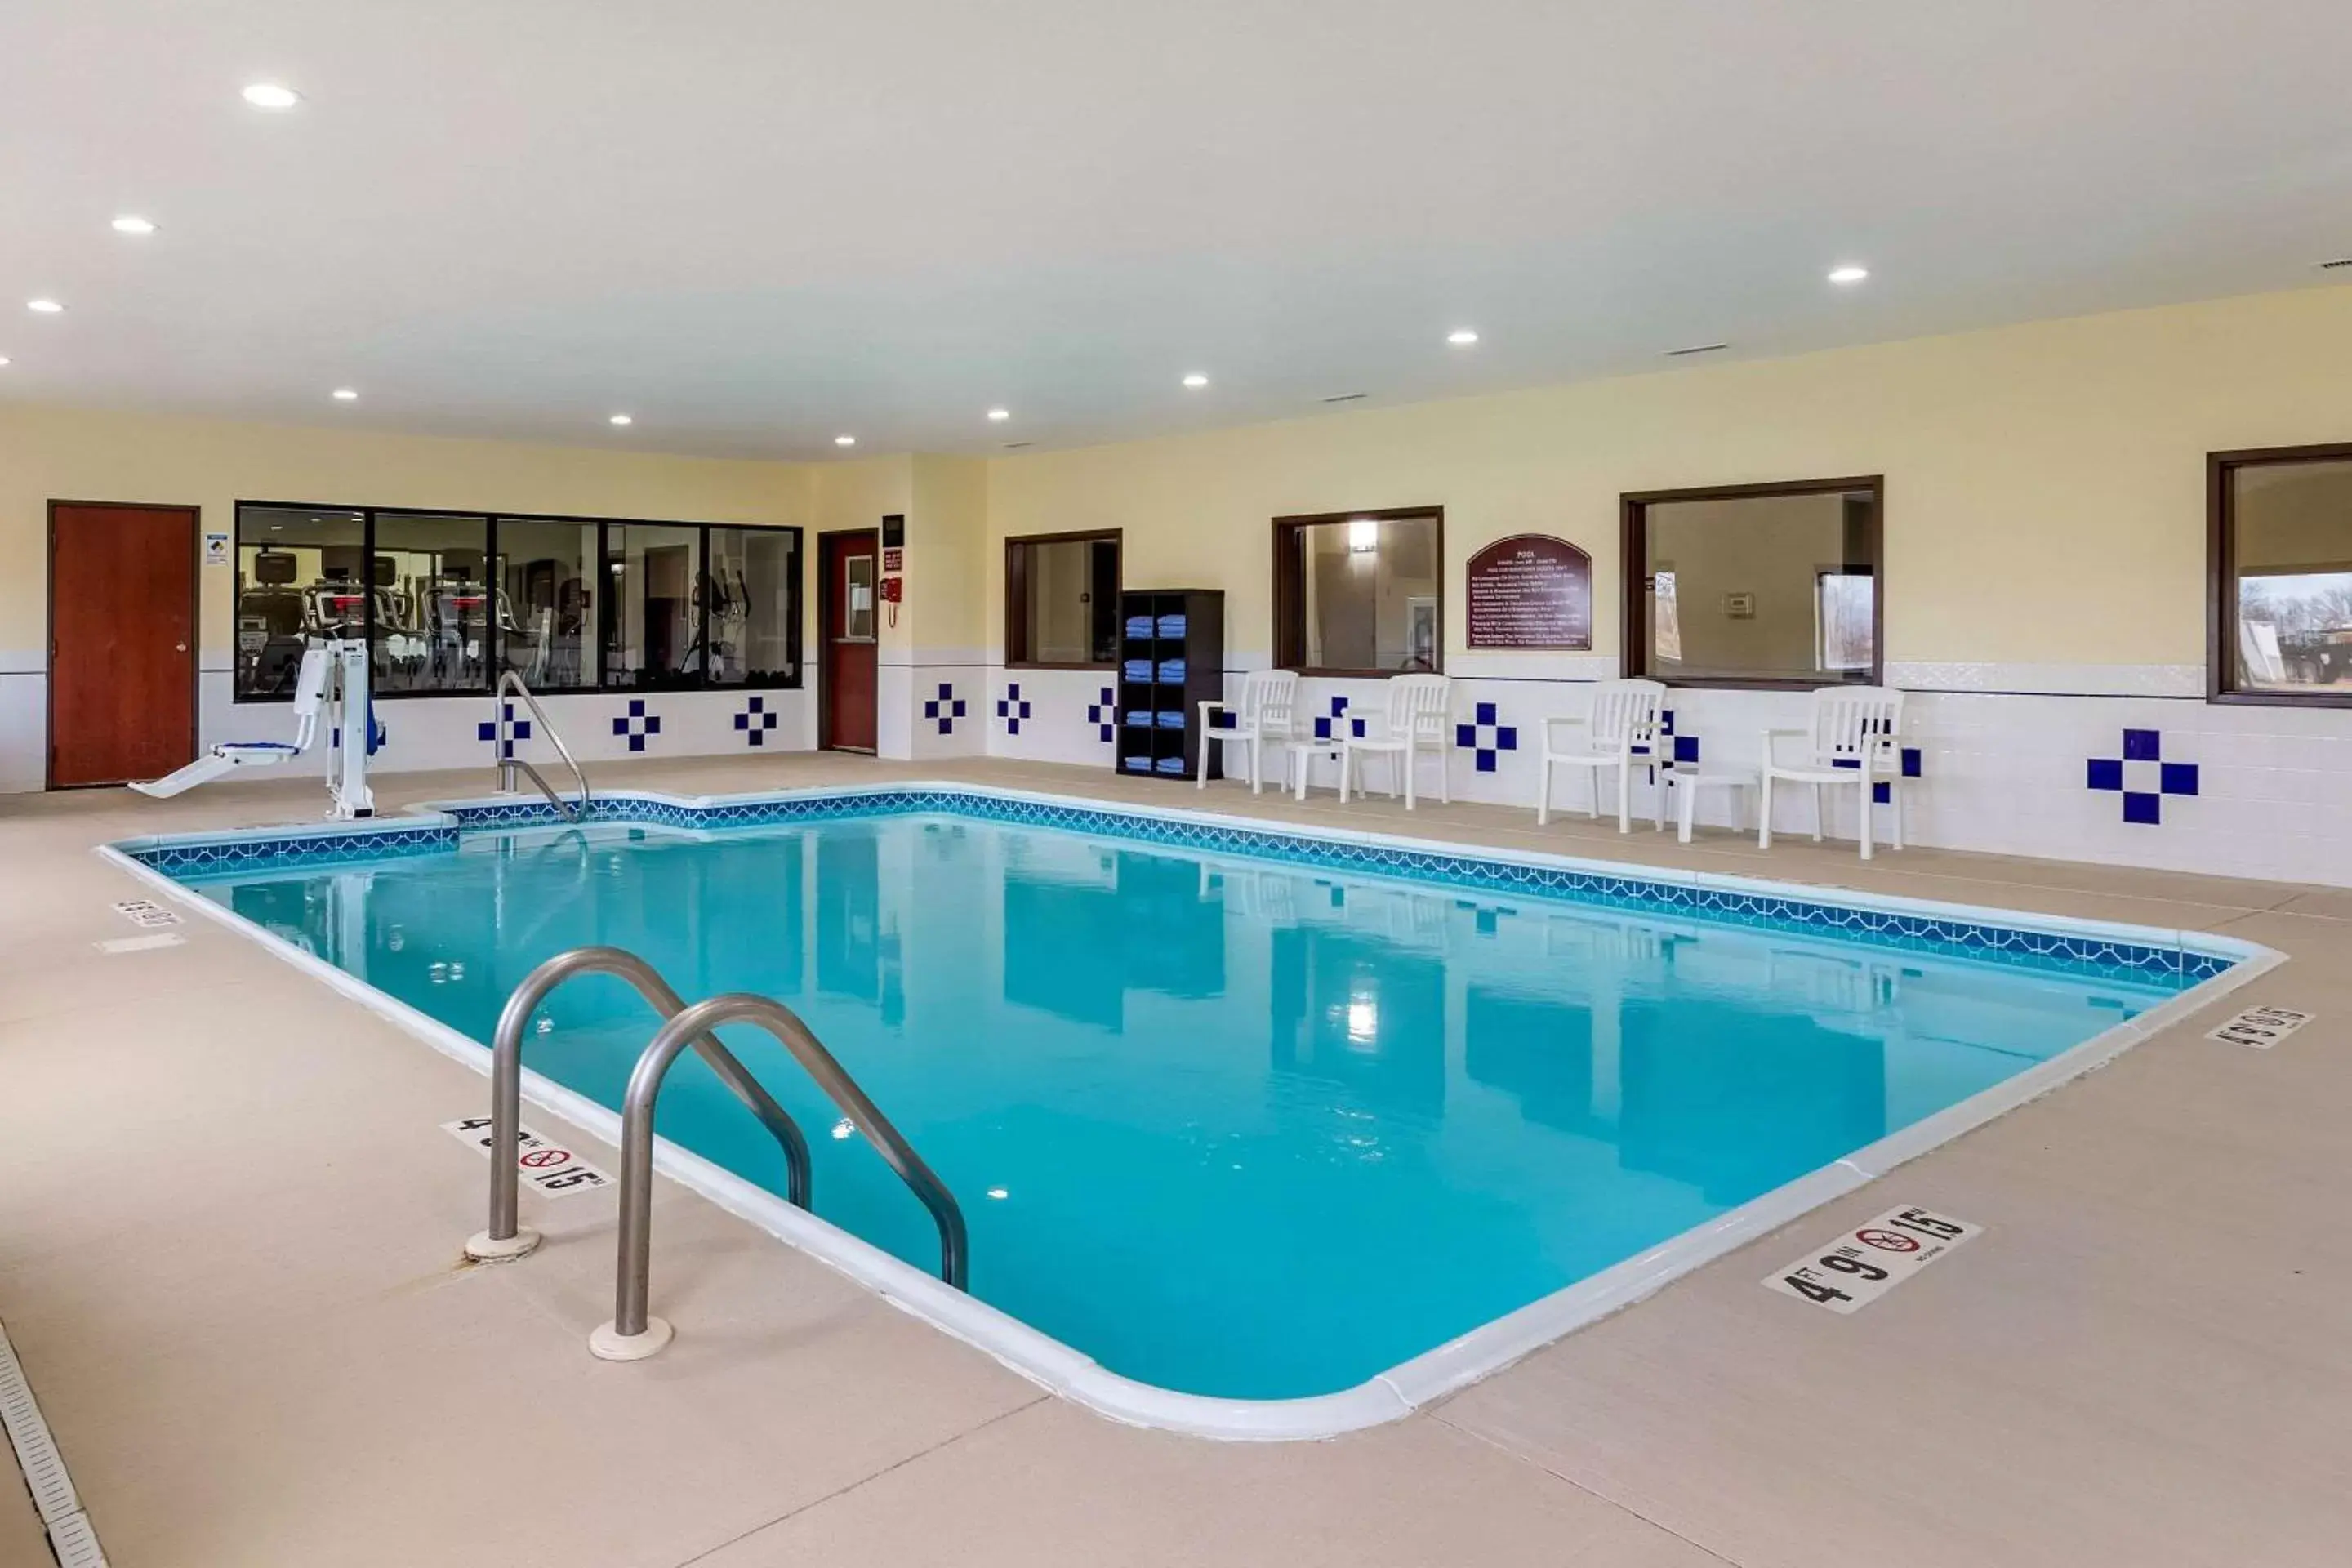 On site, Swimming Pool in Comfort Inn & Suites Davenport - Quad Cities